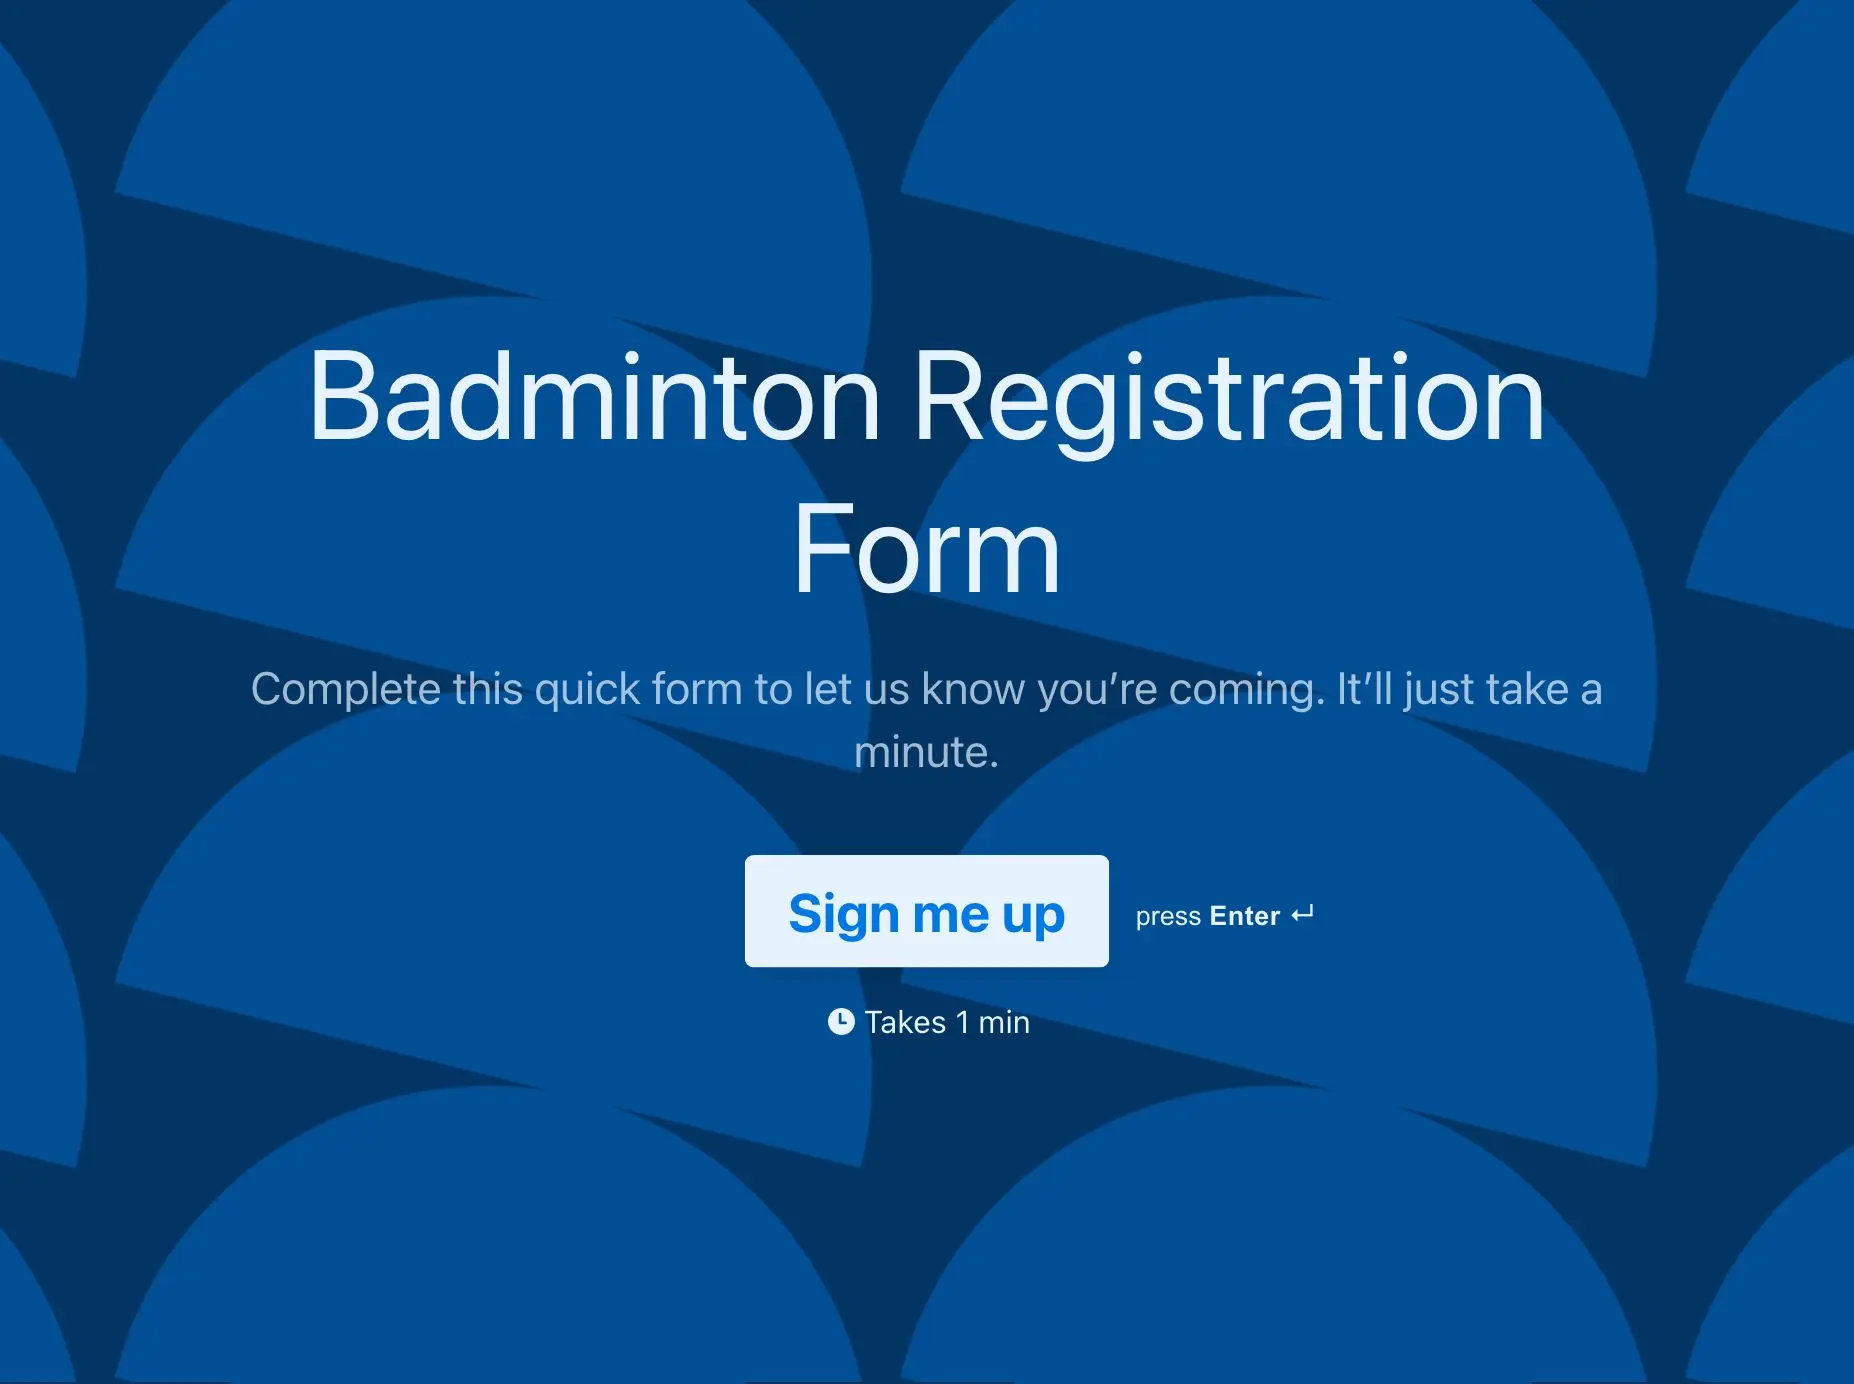 Badminton Registration Form Template Hero